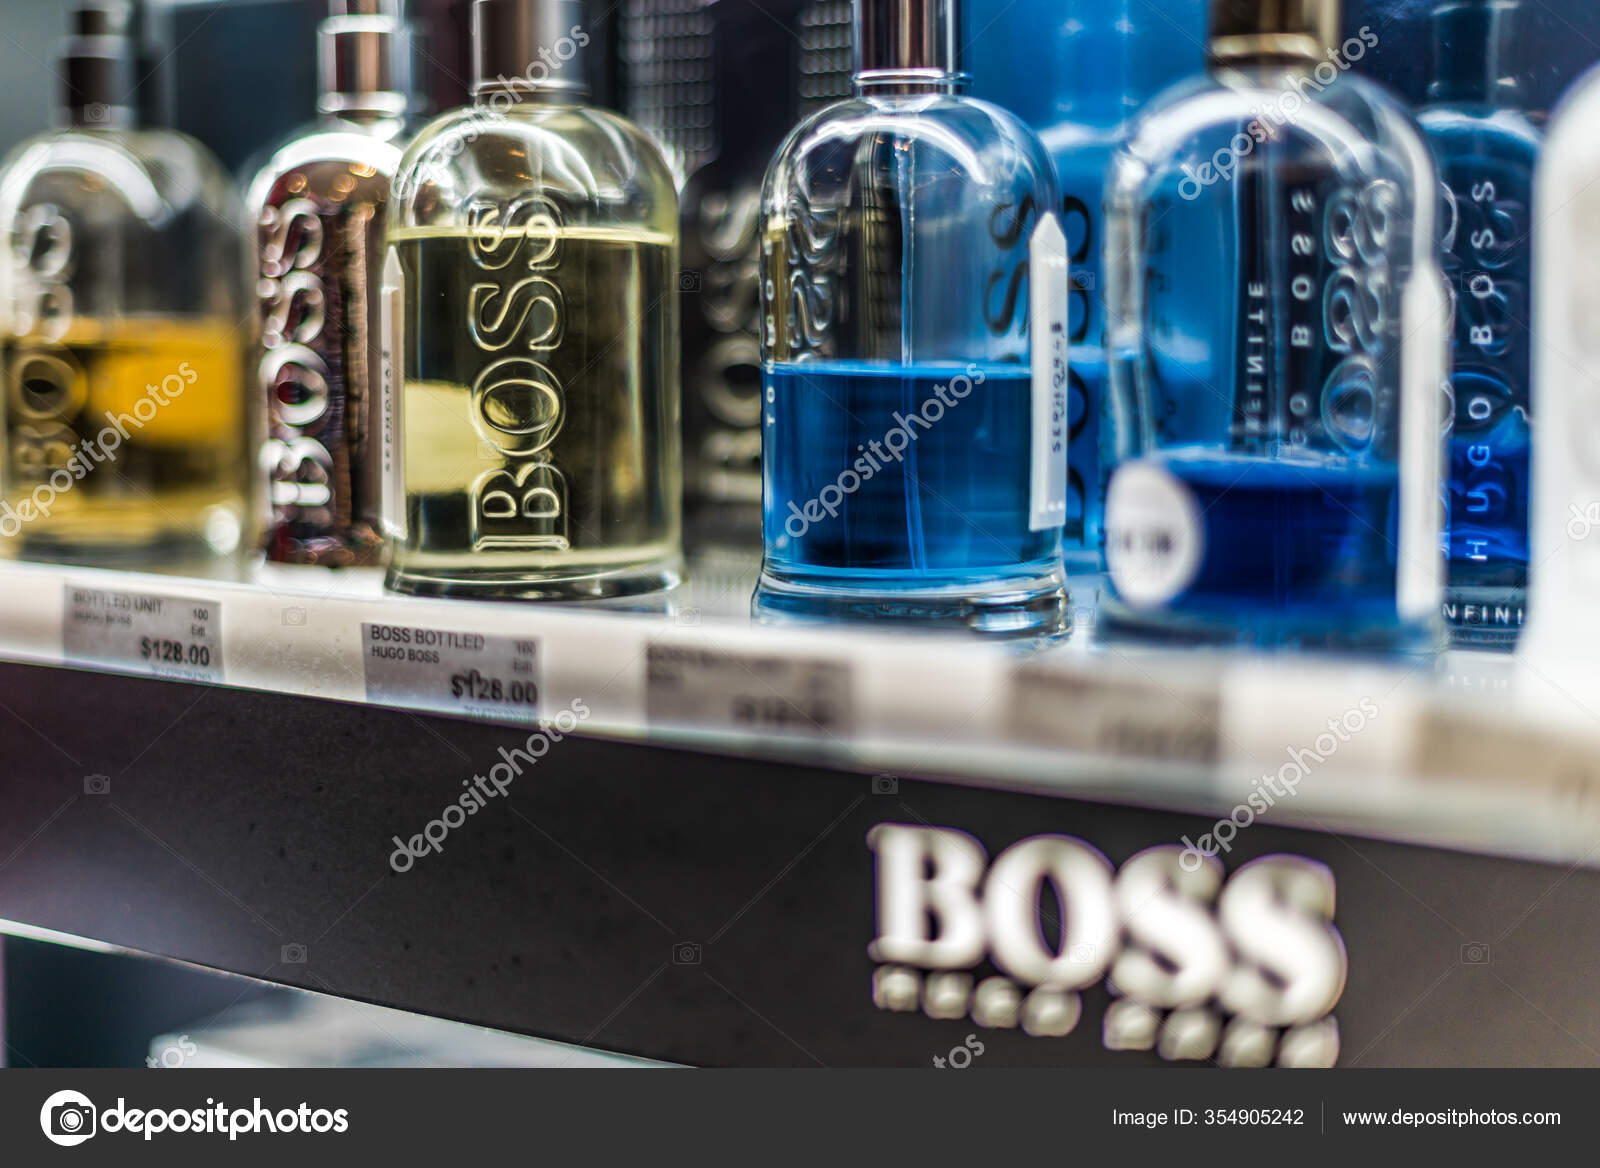 hugo boss 2020 perfume